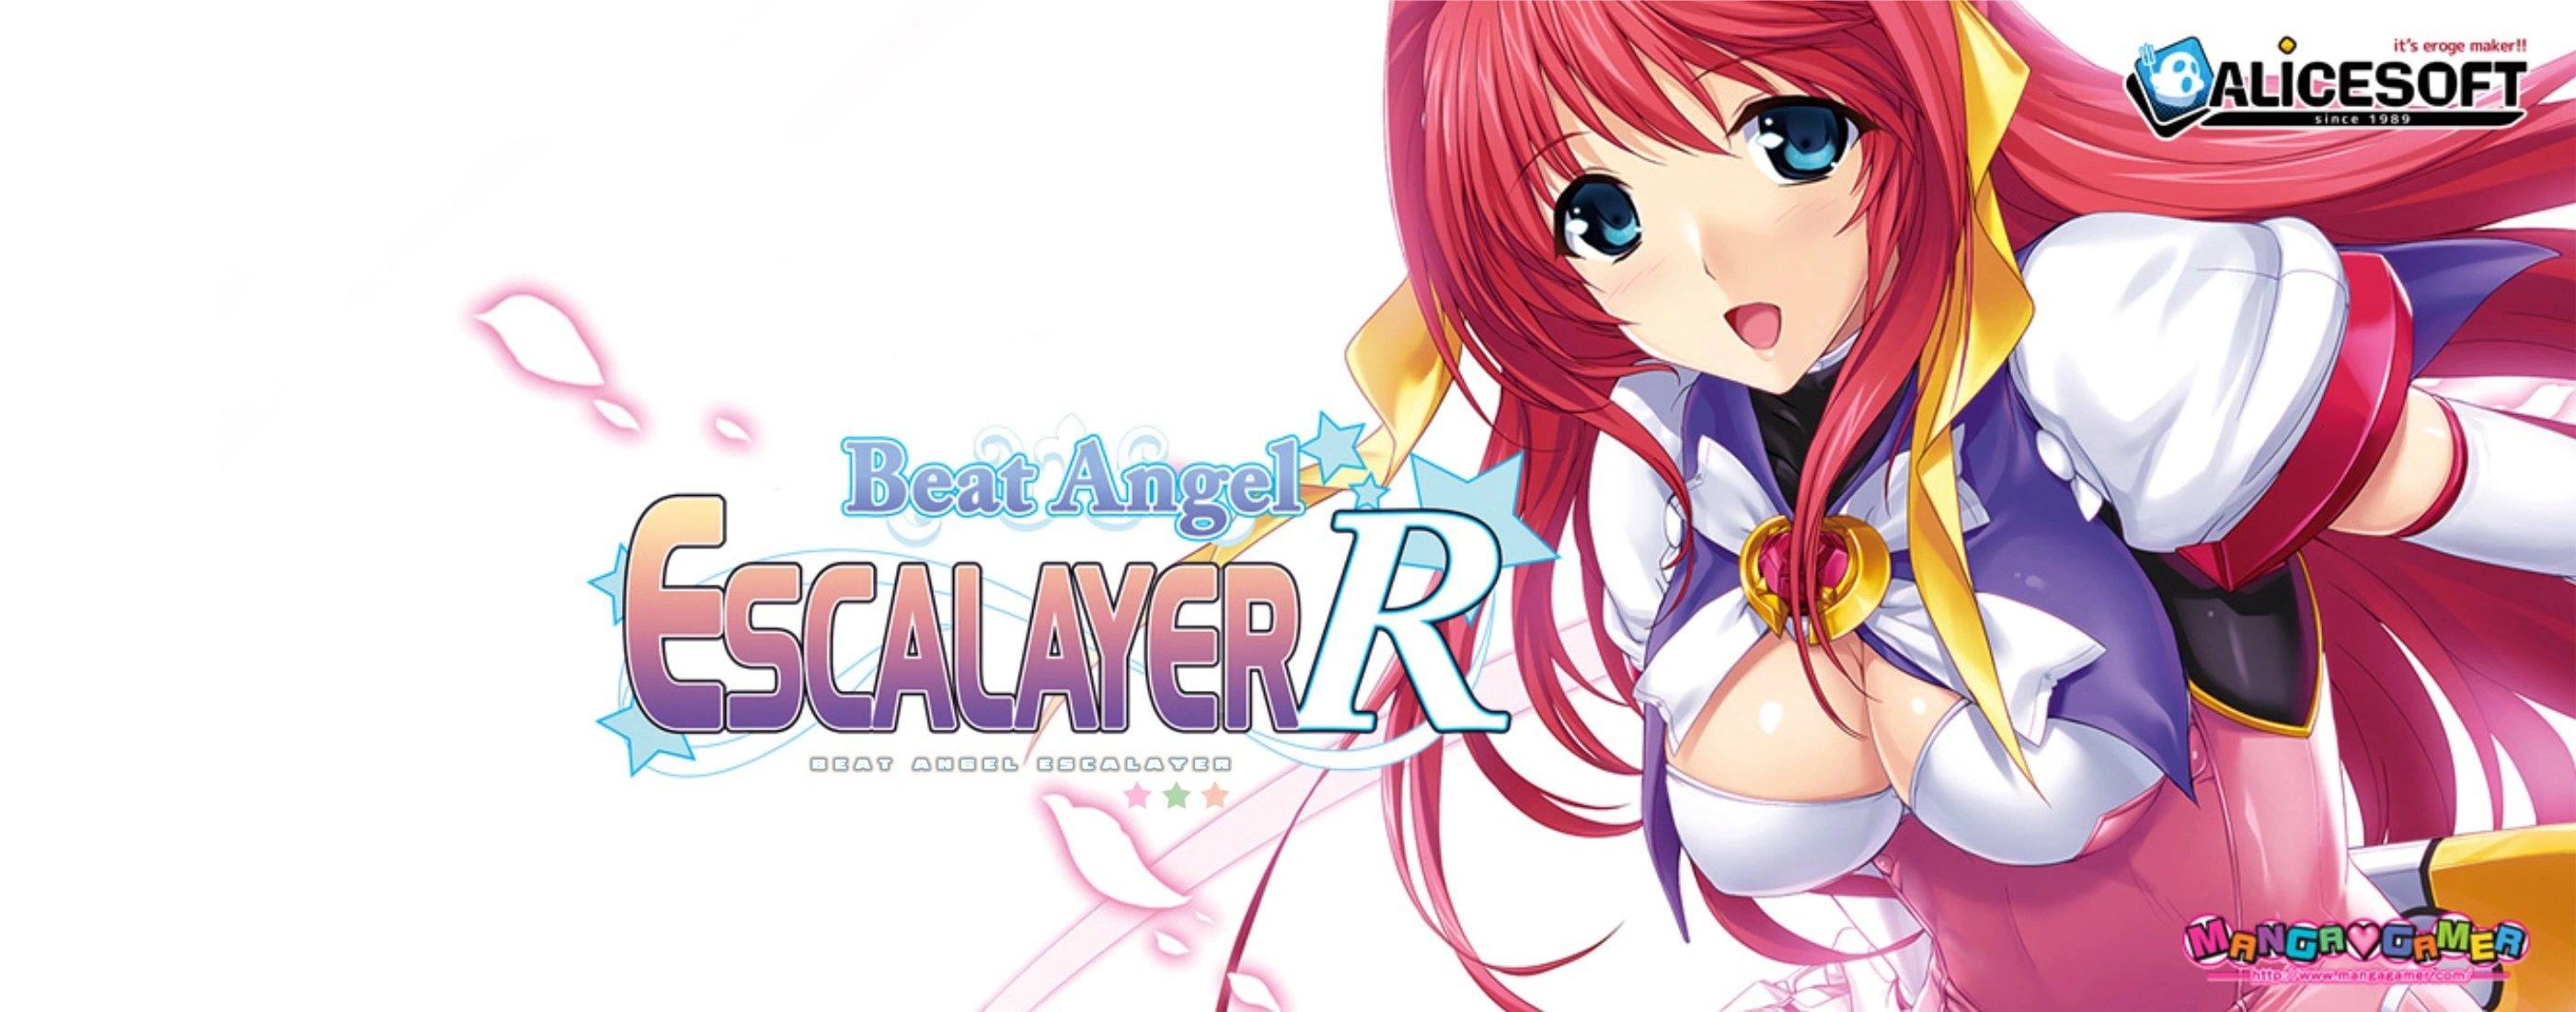 Beat Angel Escalayer R main image